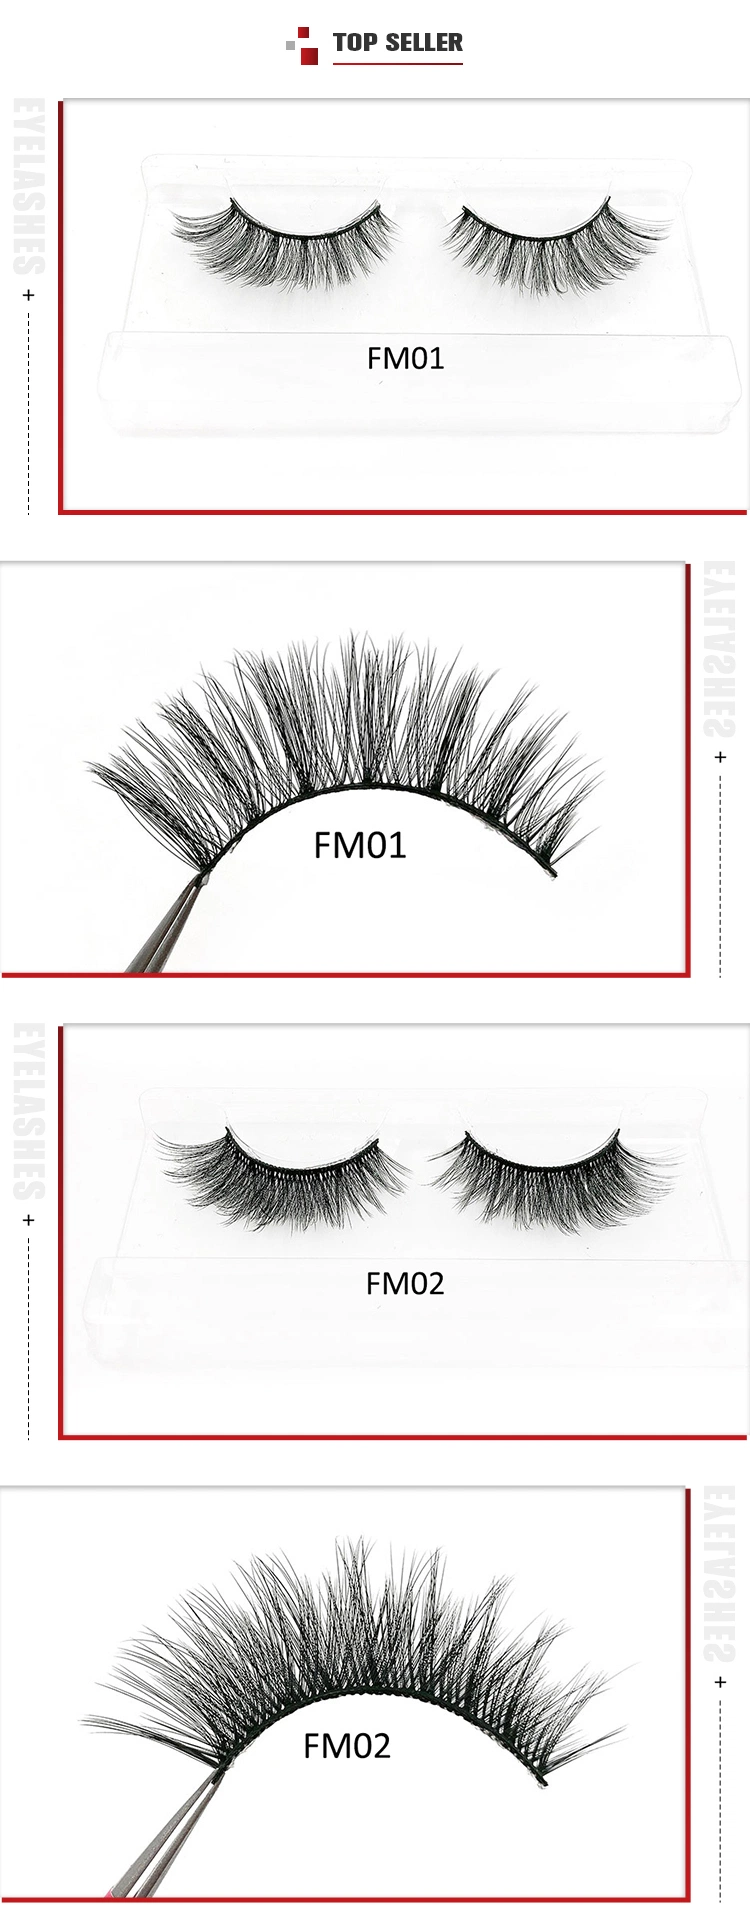 Lashwholesale Vendor Clear Bulk Factory Vendor Real Soft Hair 3D Faux Mink Eyelashes with Custom Packaging